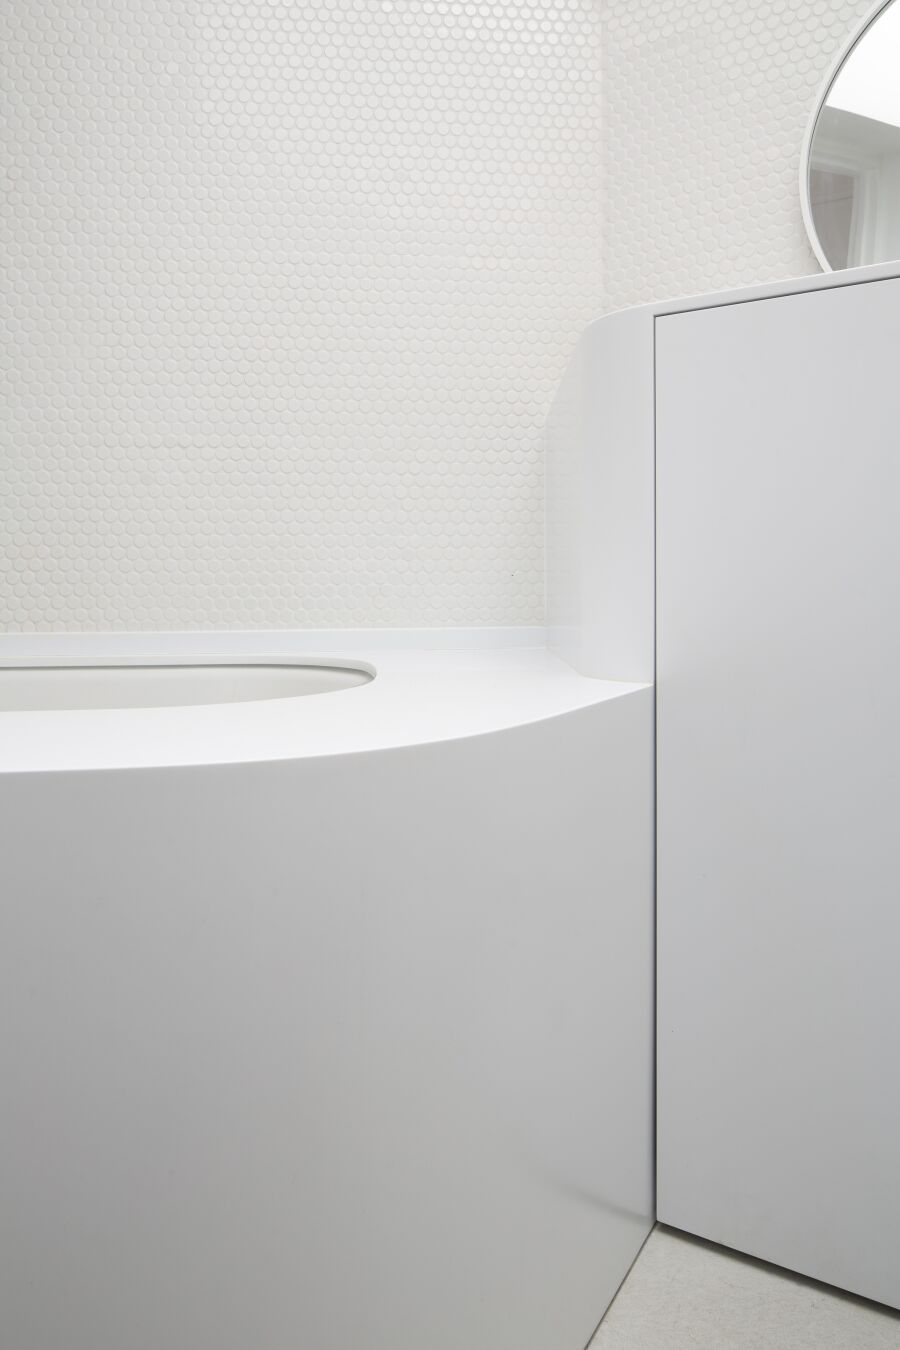 White curved Corian vanity unit and bath surround.